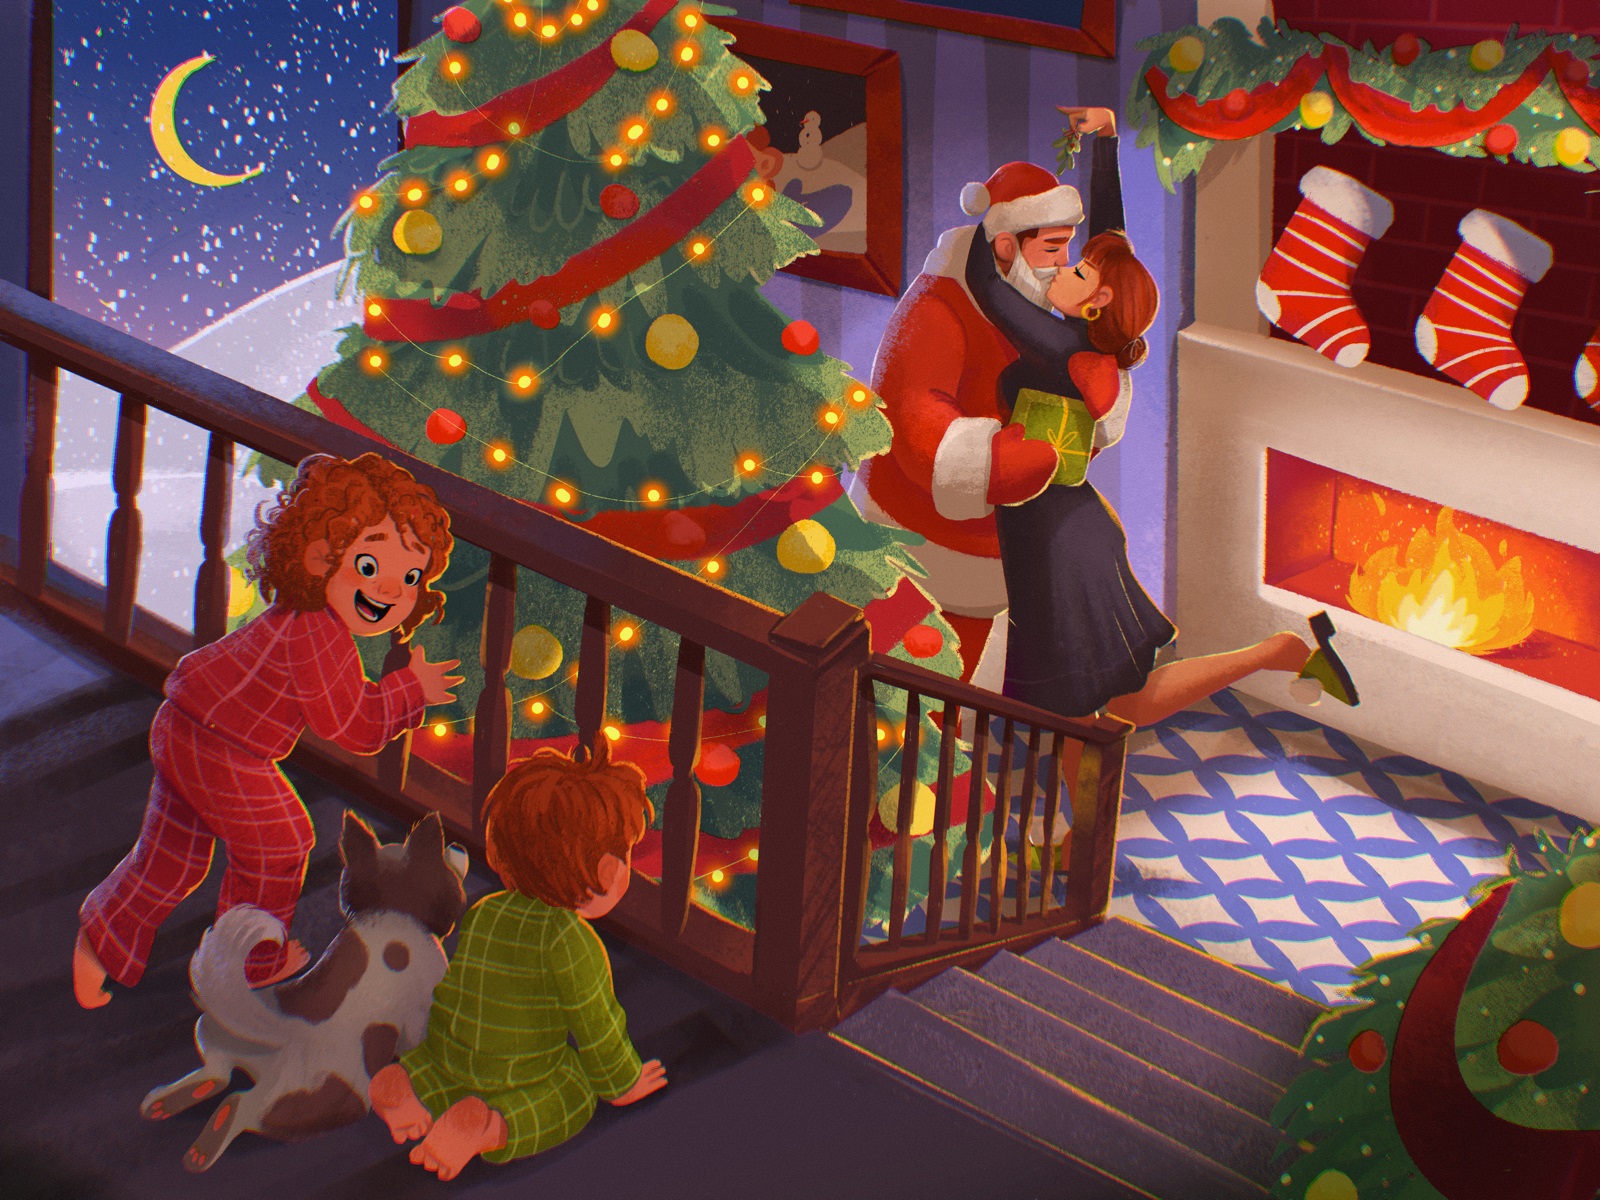 Christmas Illustration Art To Feel the Magic of Winter Holidays